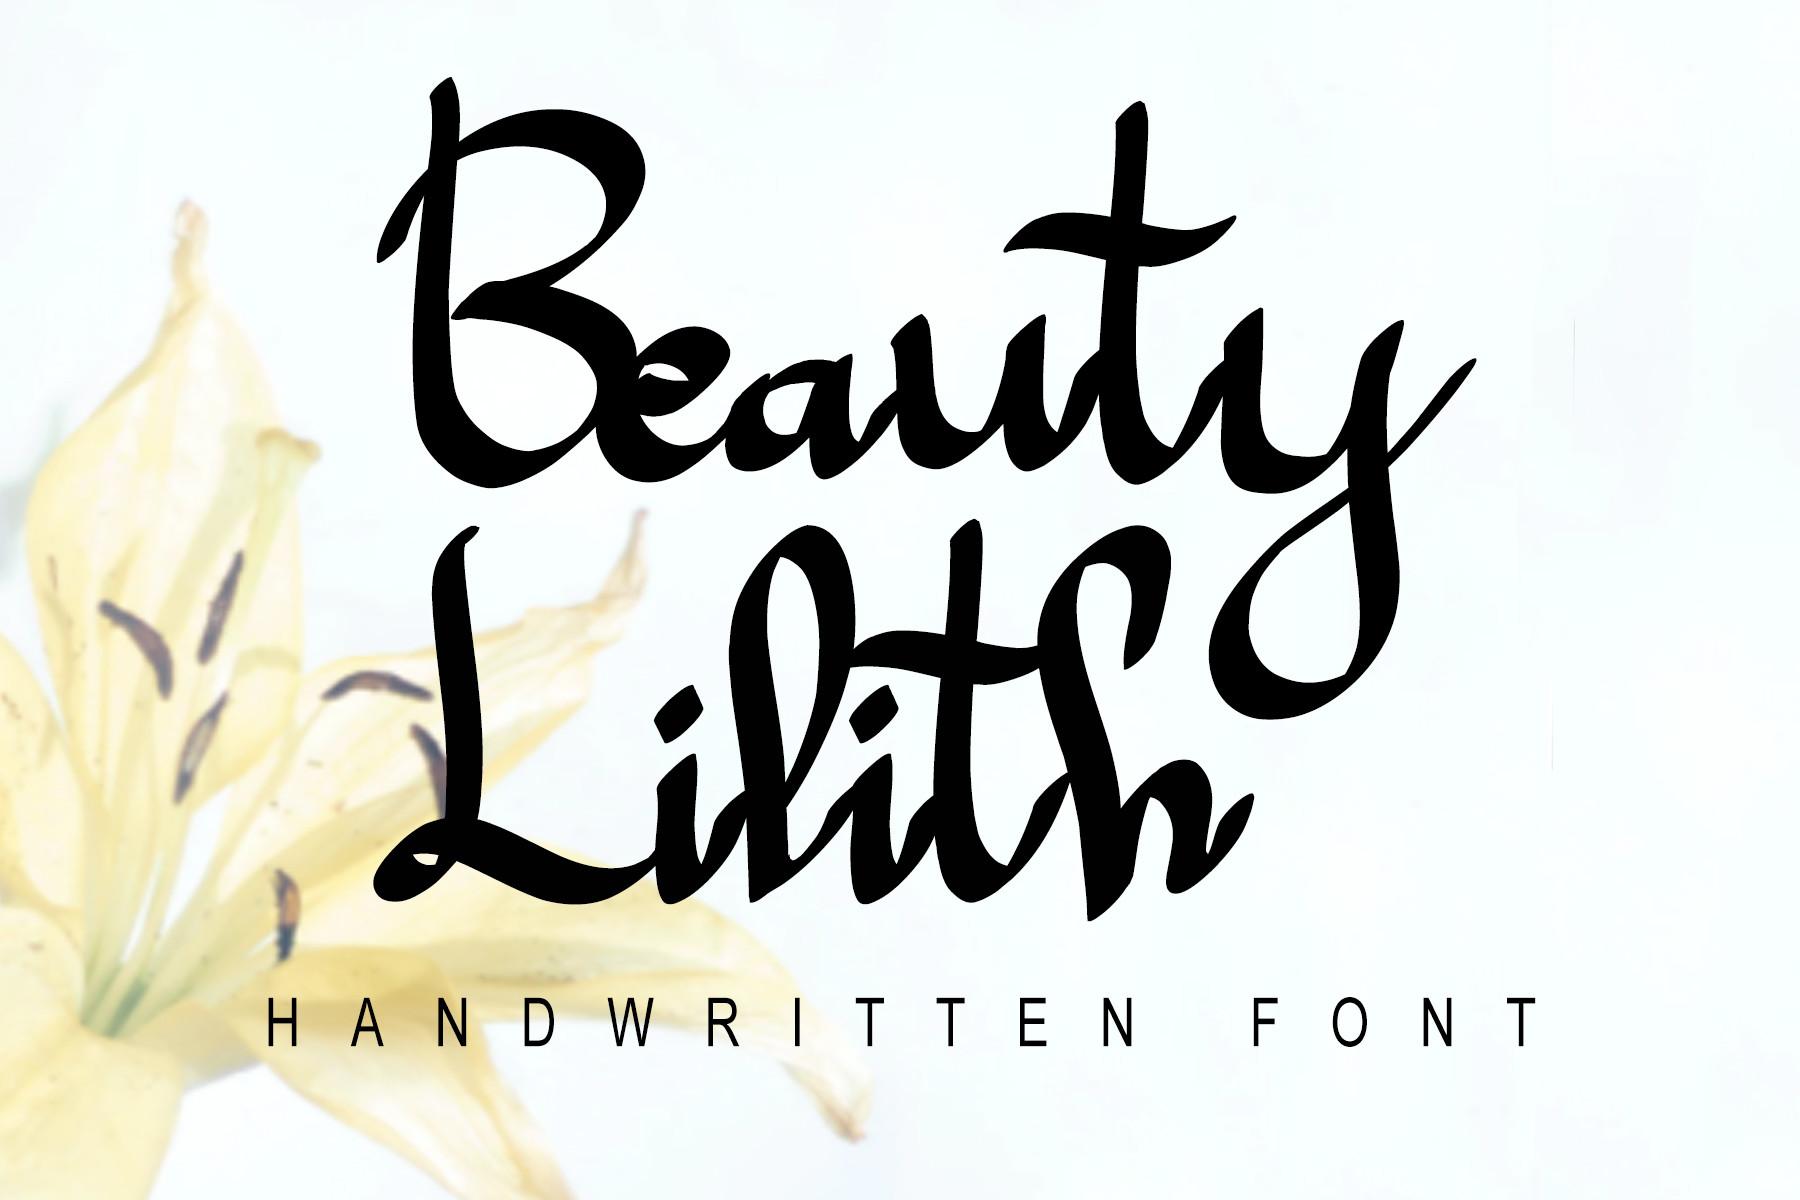 Beauty Lilith Font